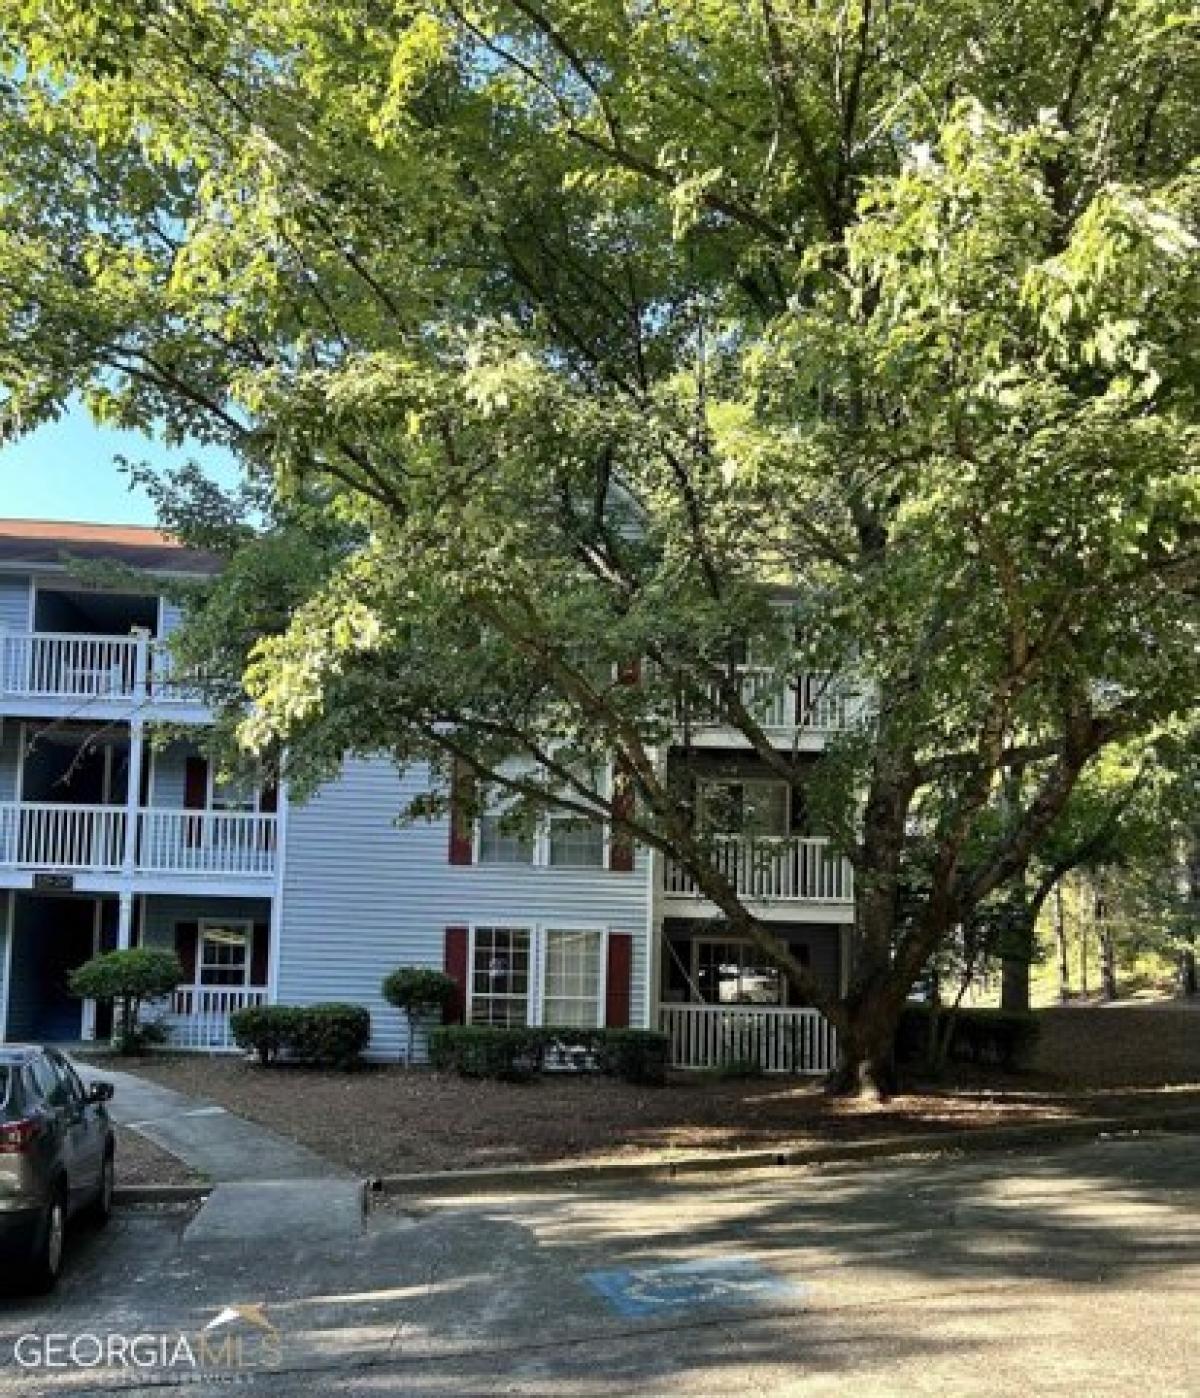 Picture of Home For Sale in Avondale Estates, Georgia, United States